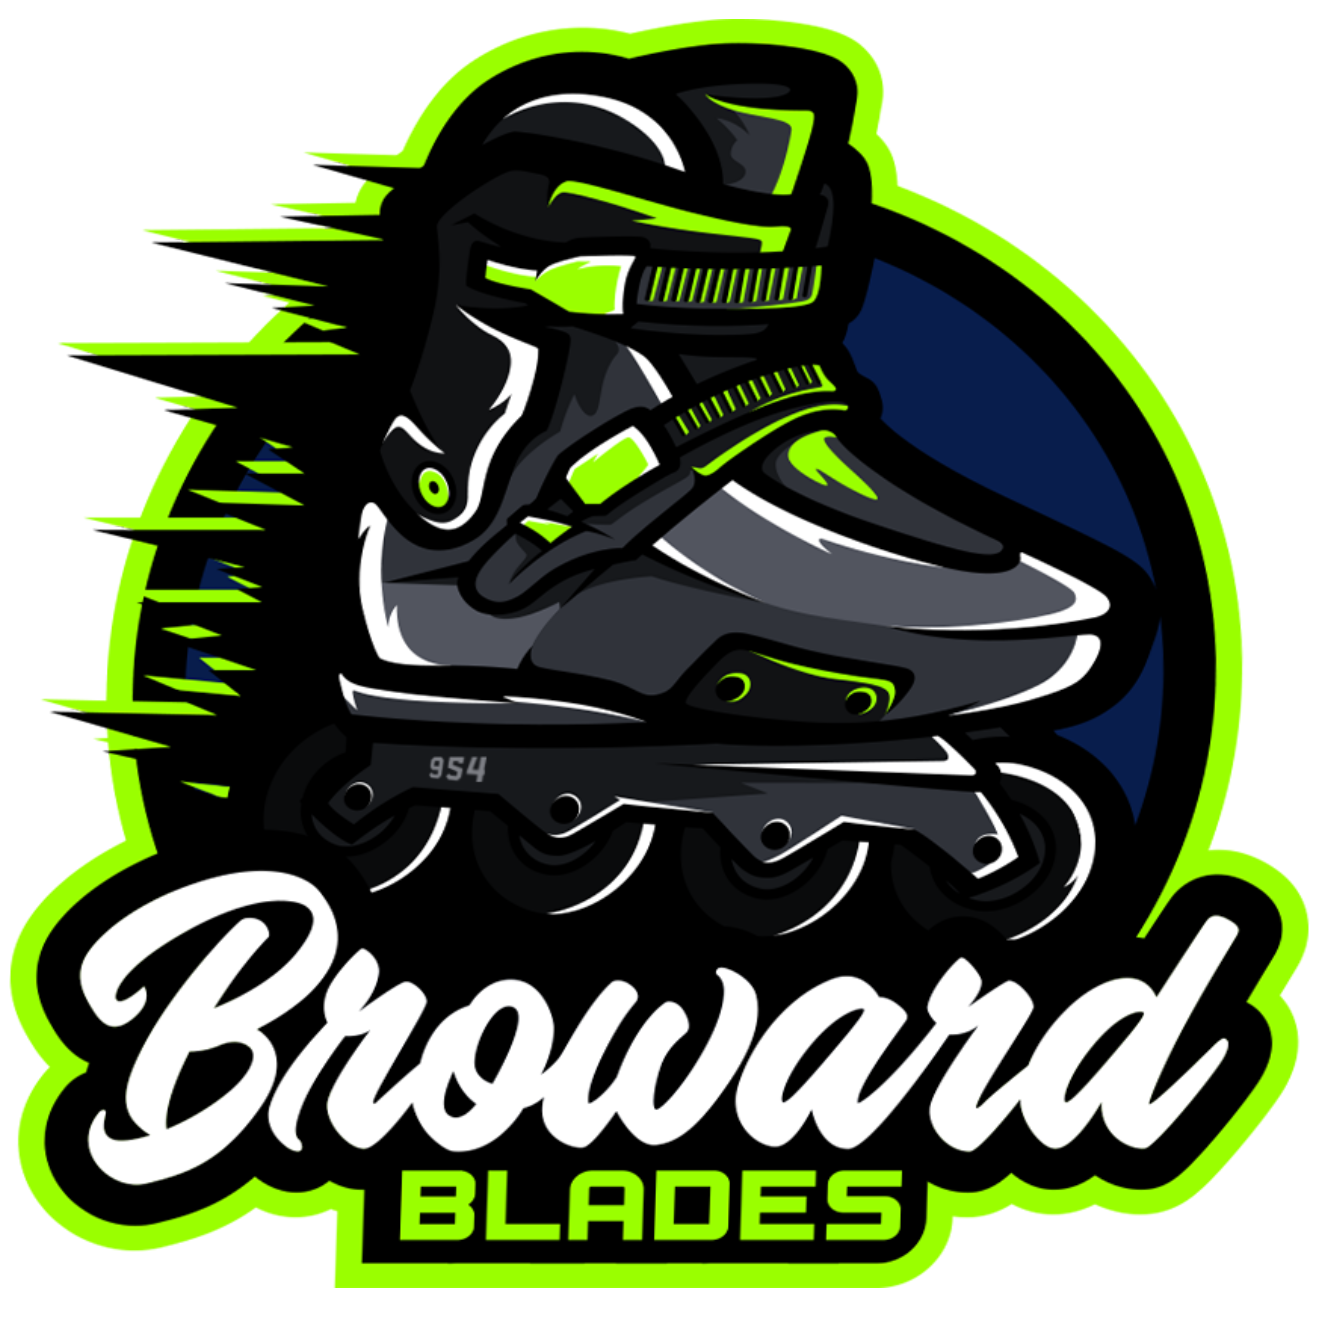 Broward Blades